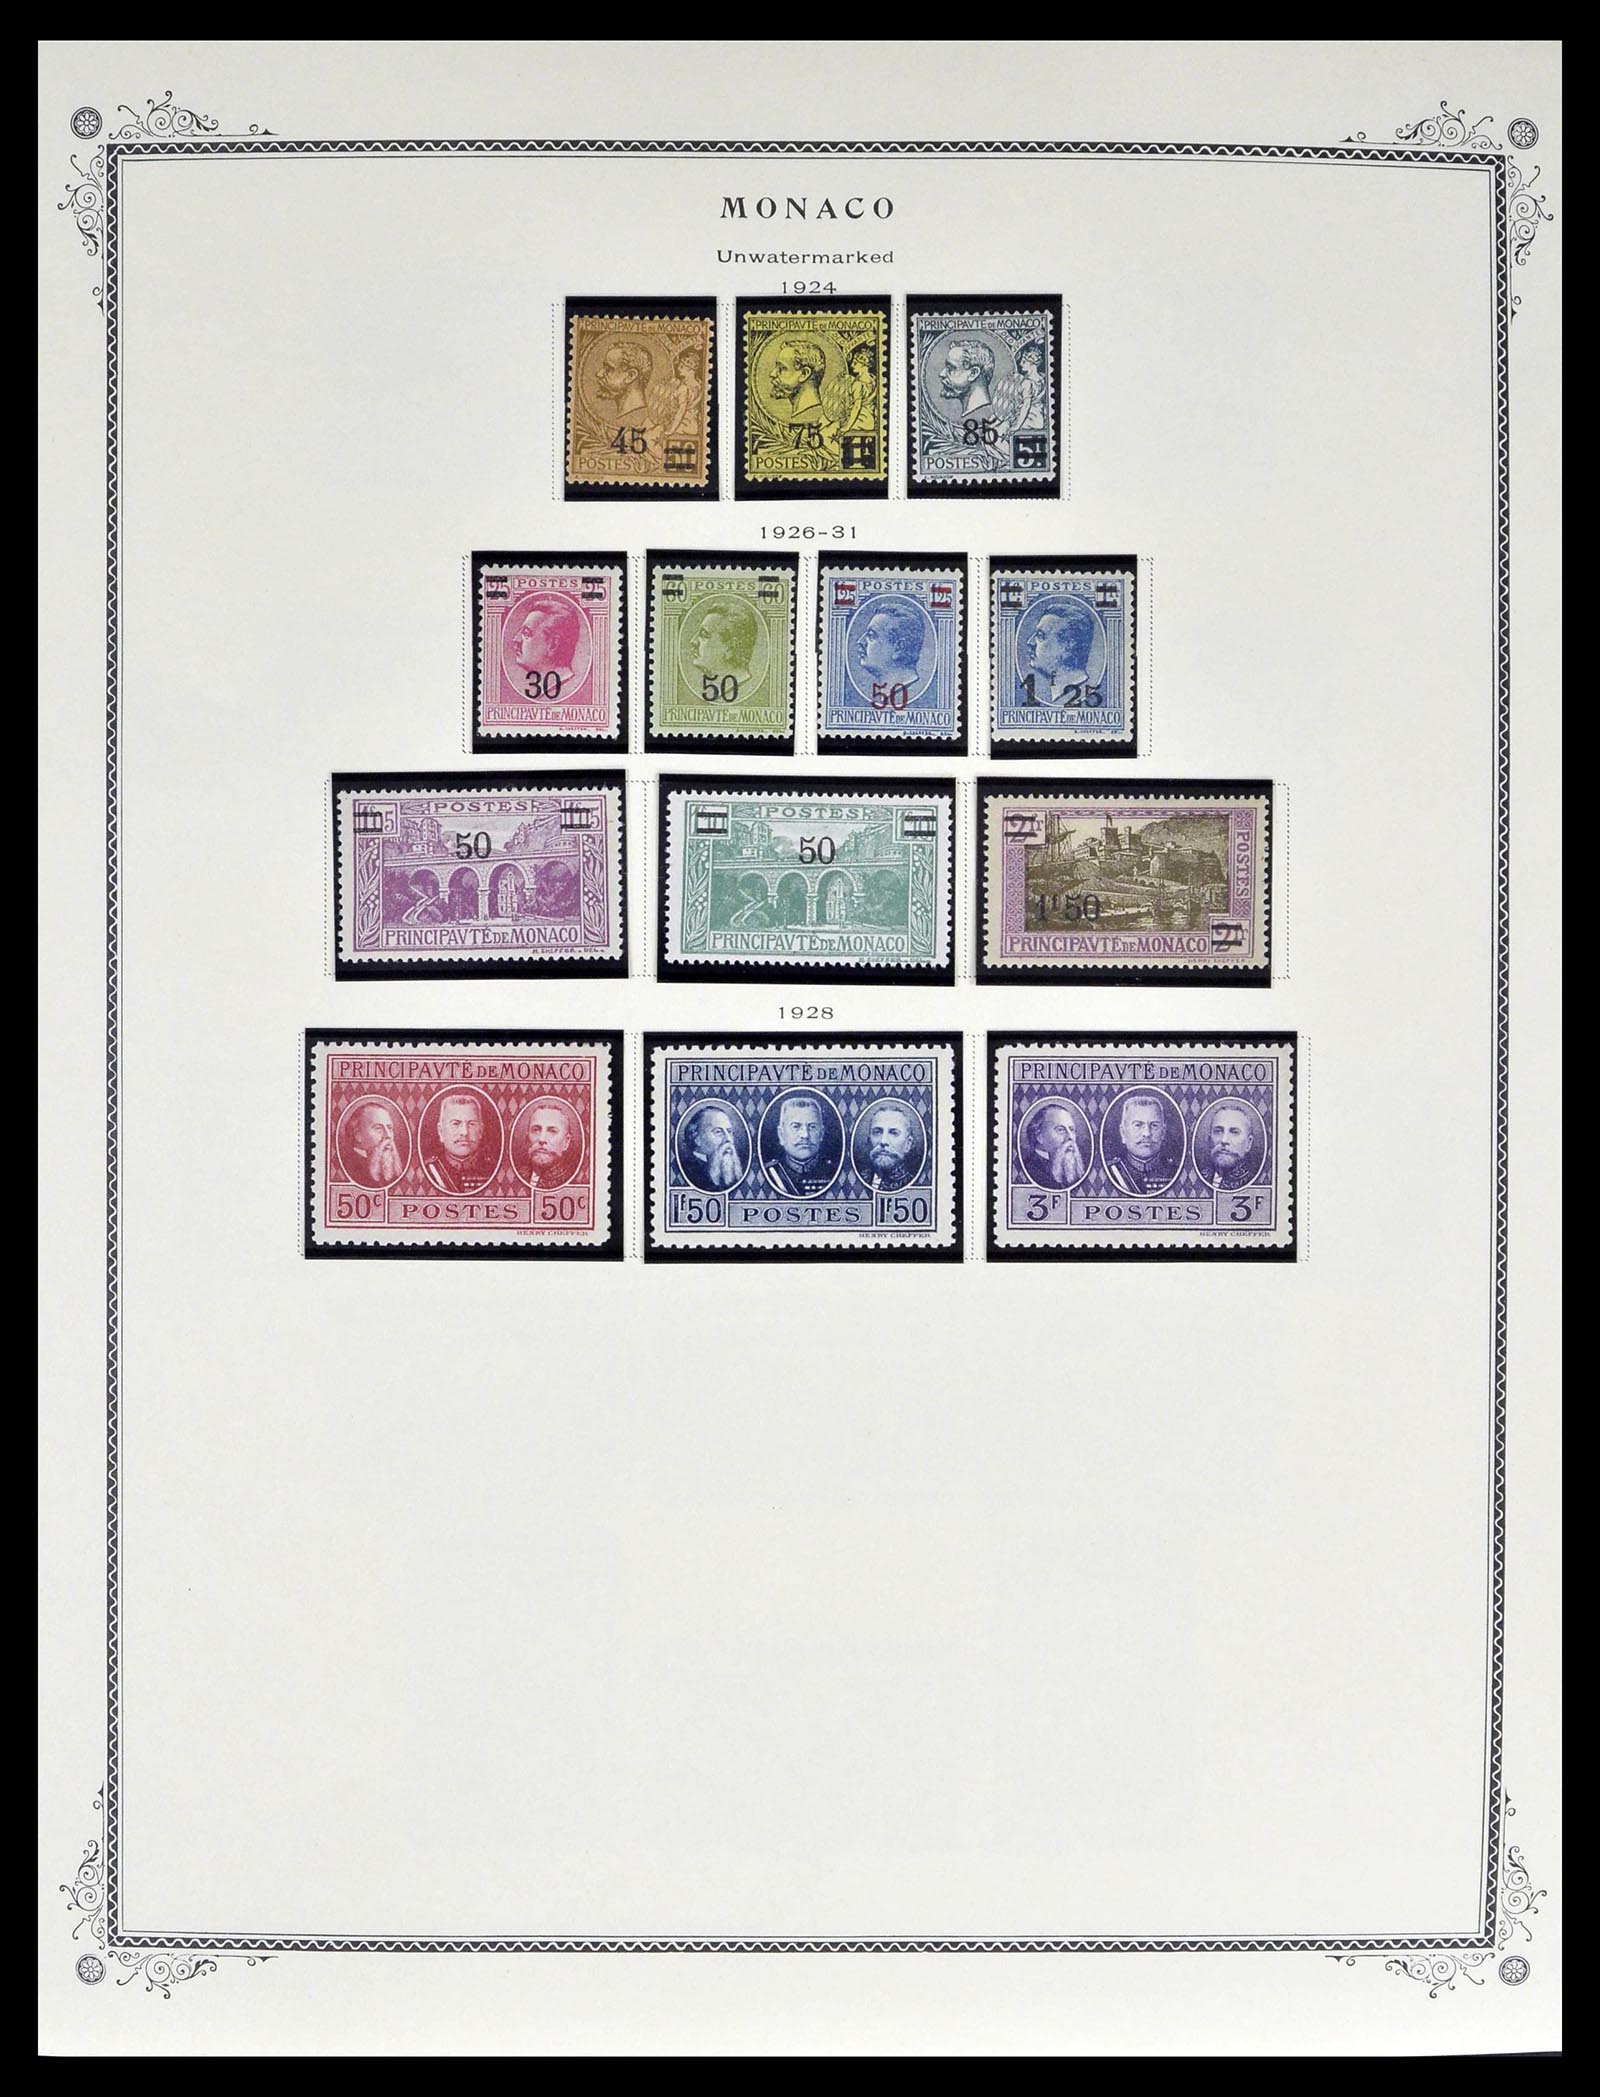 39181 0010 - Stamp collection 39181 Monaco 1885-1980.